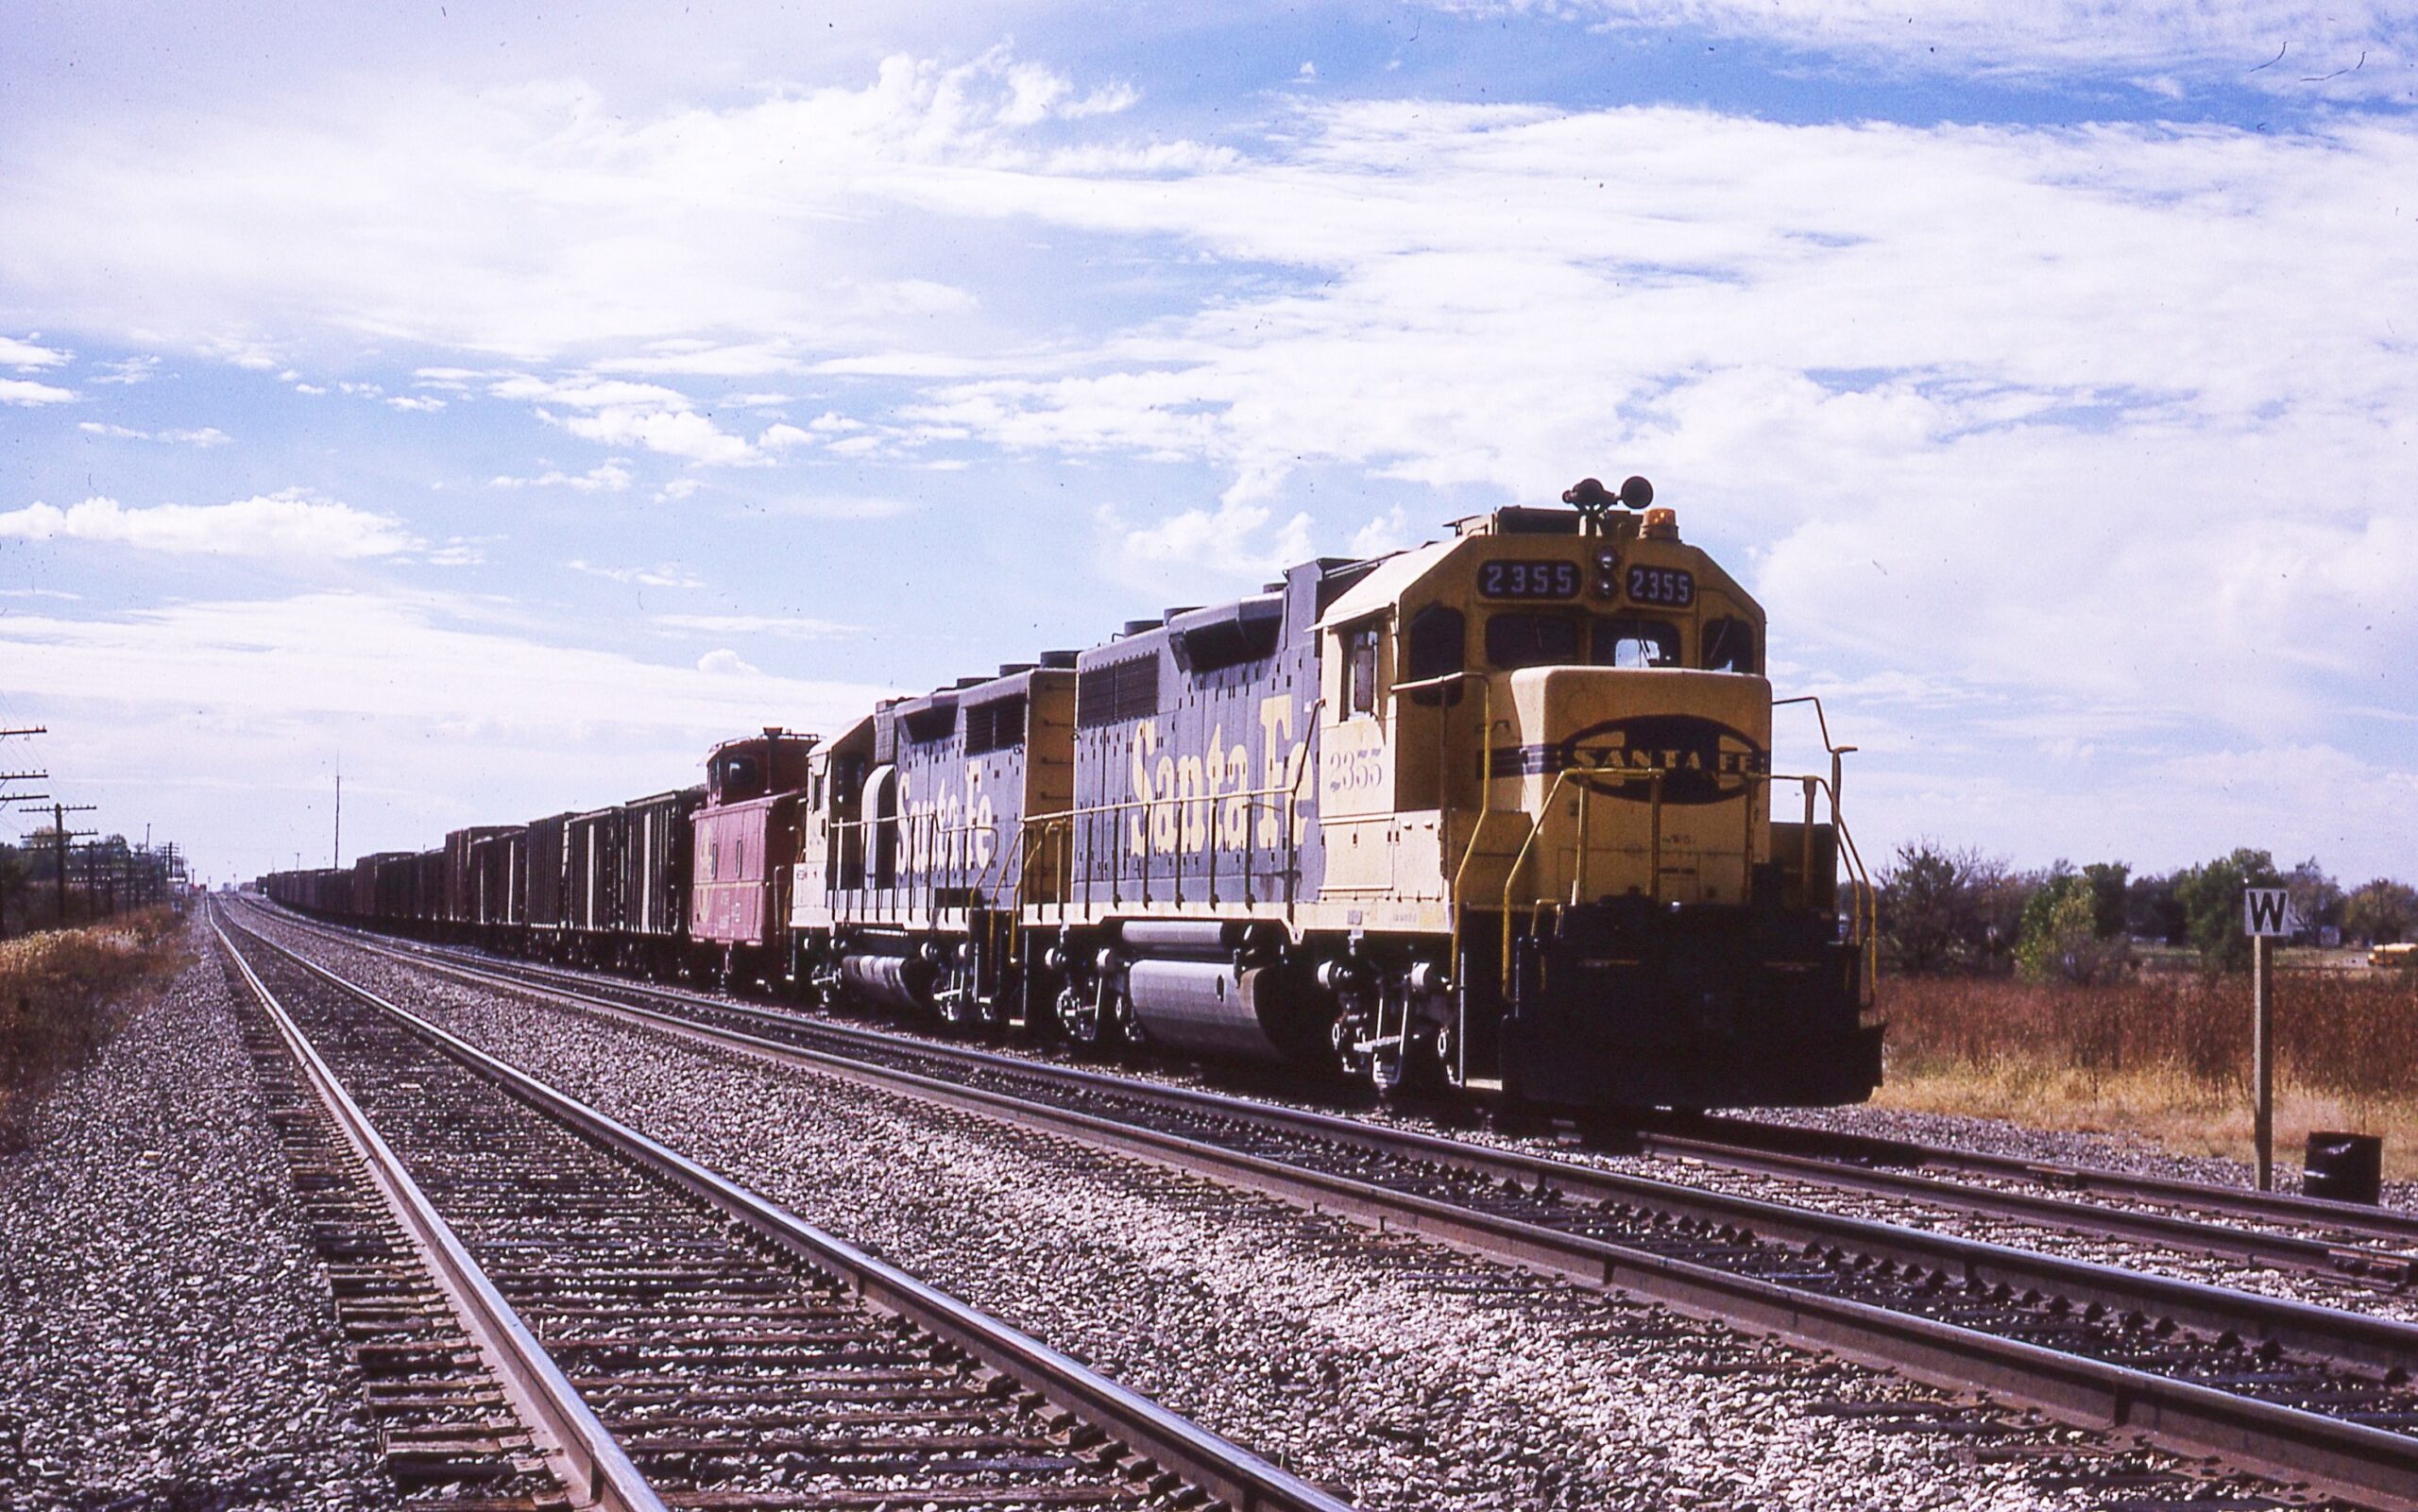 Atchison Topeka and Santa Fe Railway | Cassoday, Kansas | EMD Diesel-electric locomotive GP38u #2355 + 1 | Hopper train | October 21,1989 | Dave Rector Photo